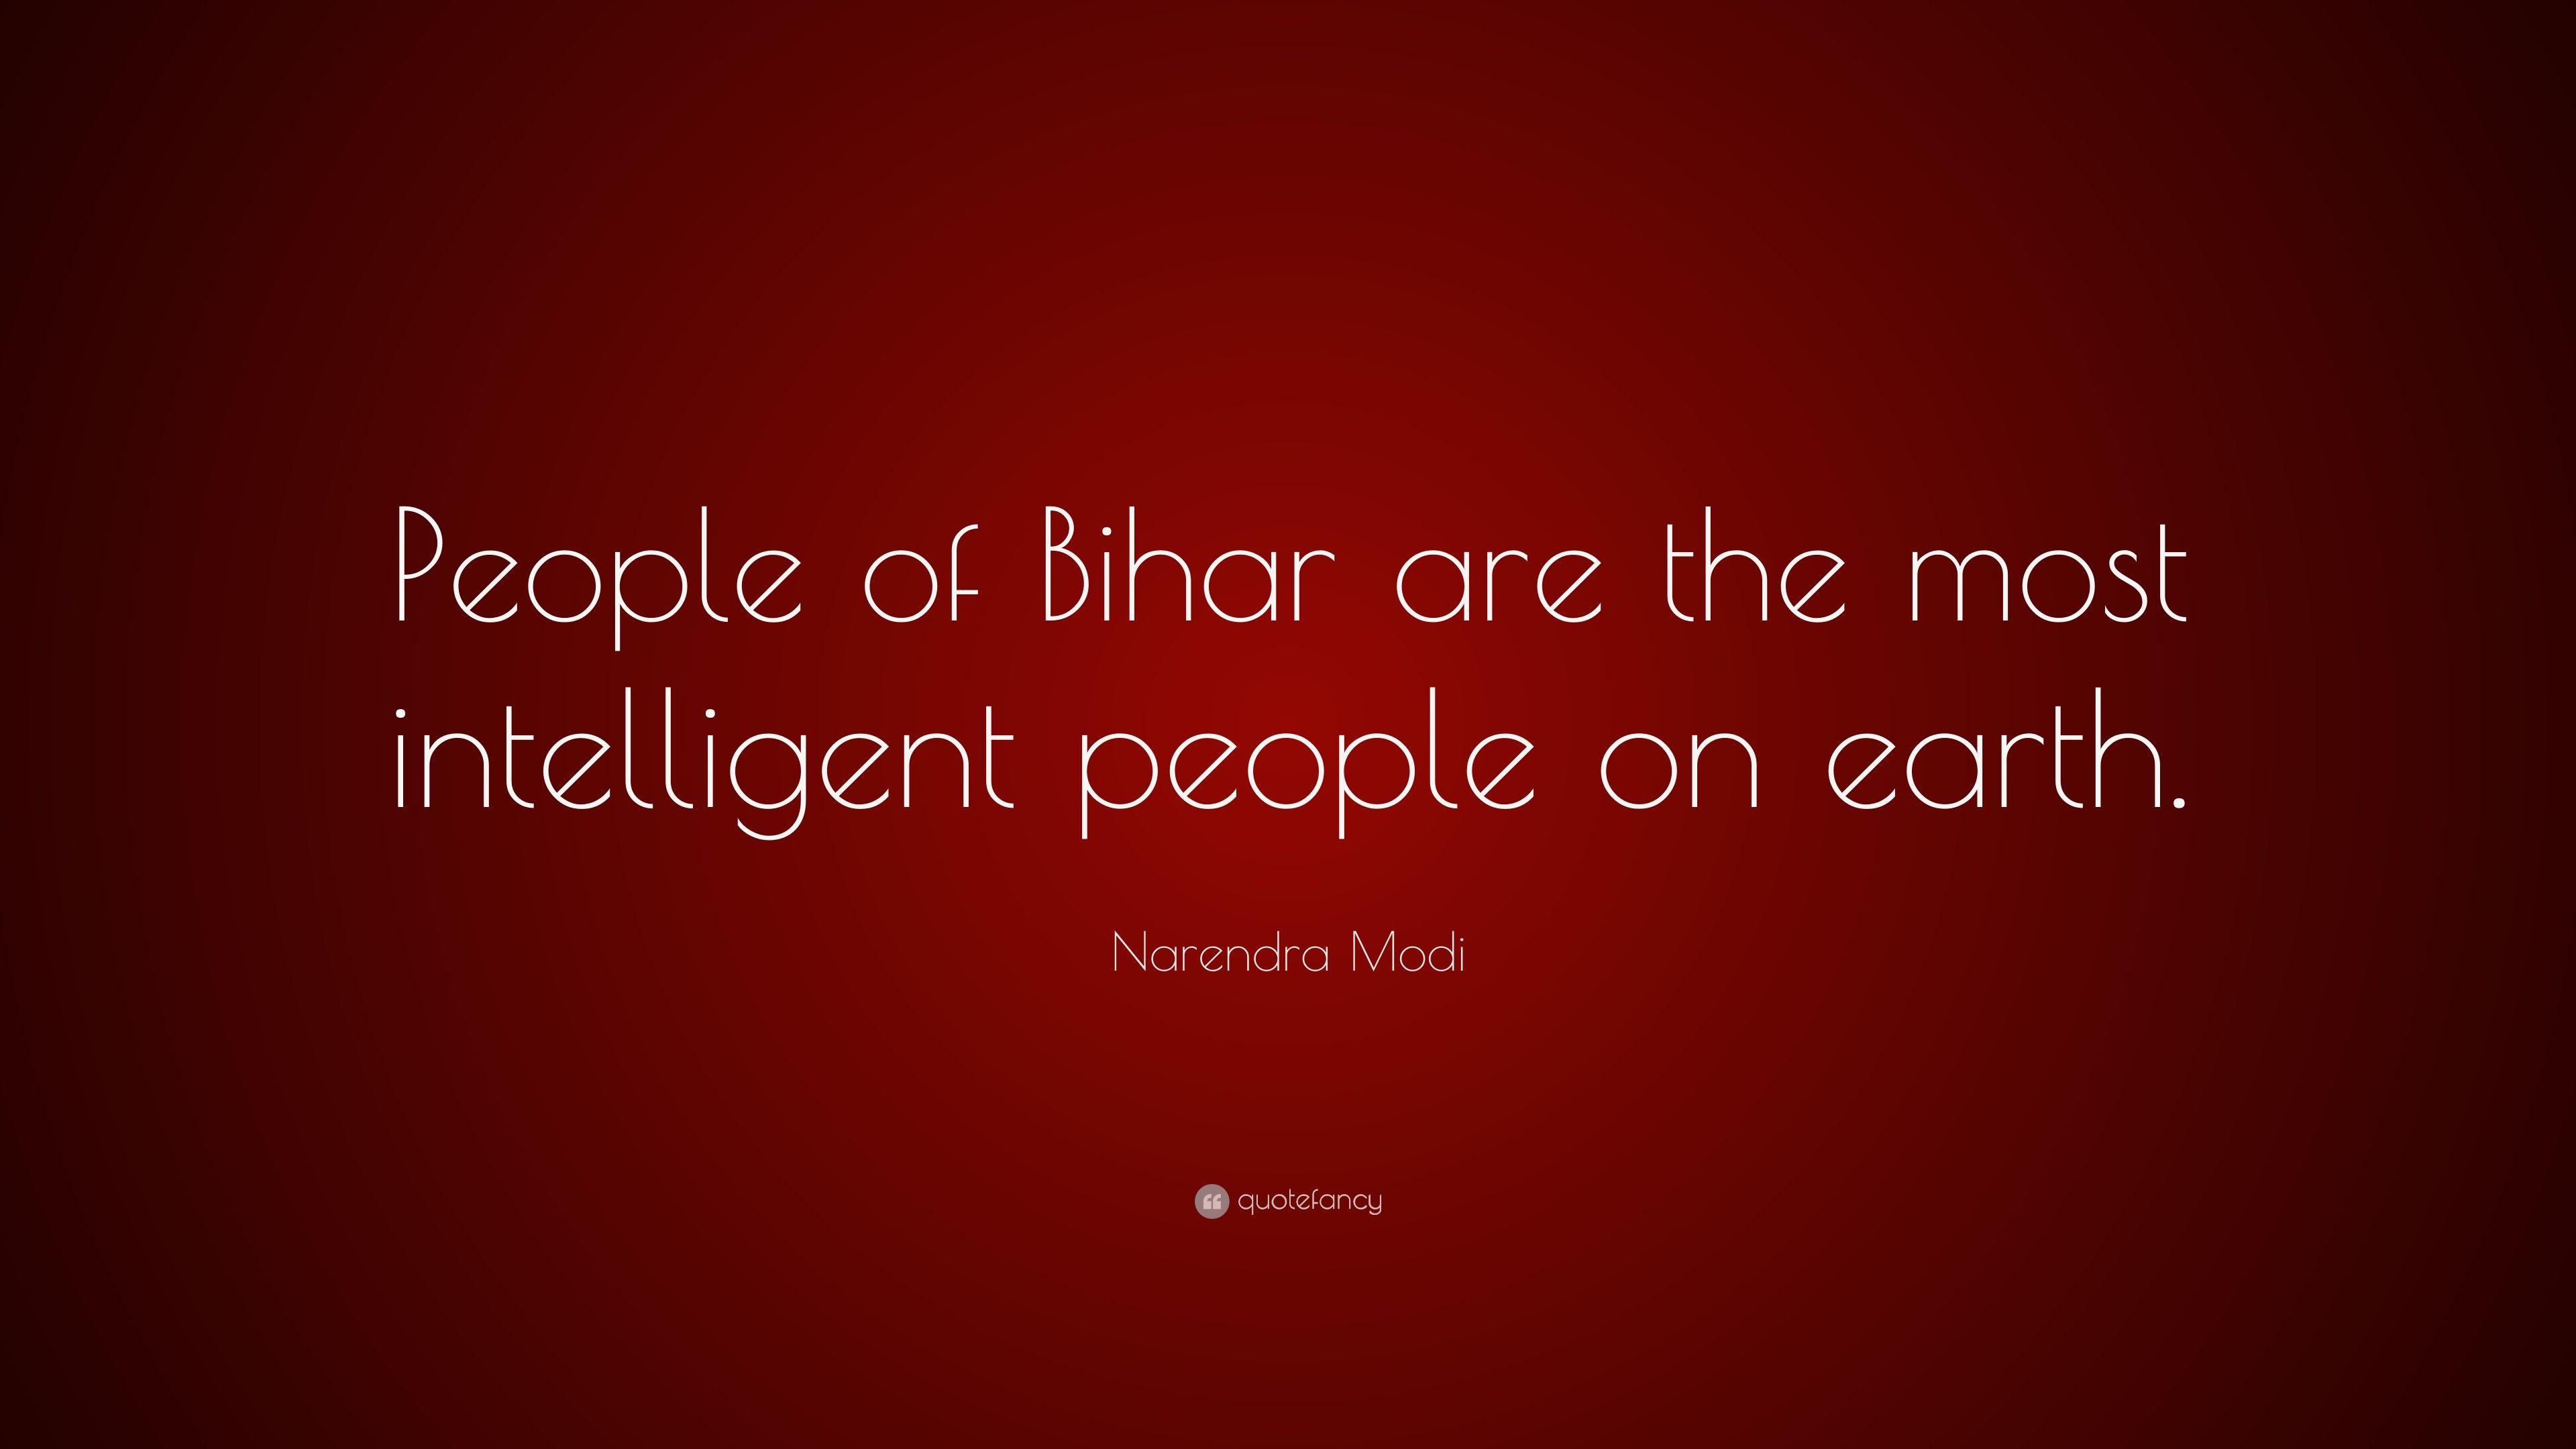 Narendra Modi Quote: “People of Bihar are the most intelligent